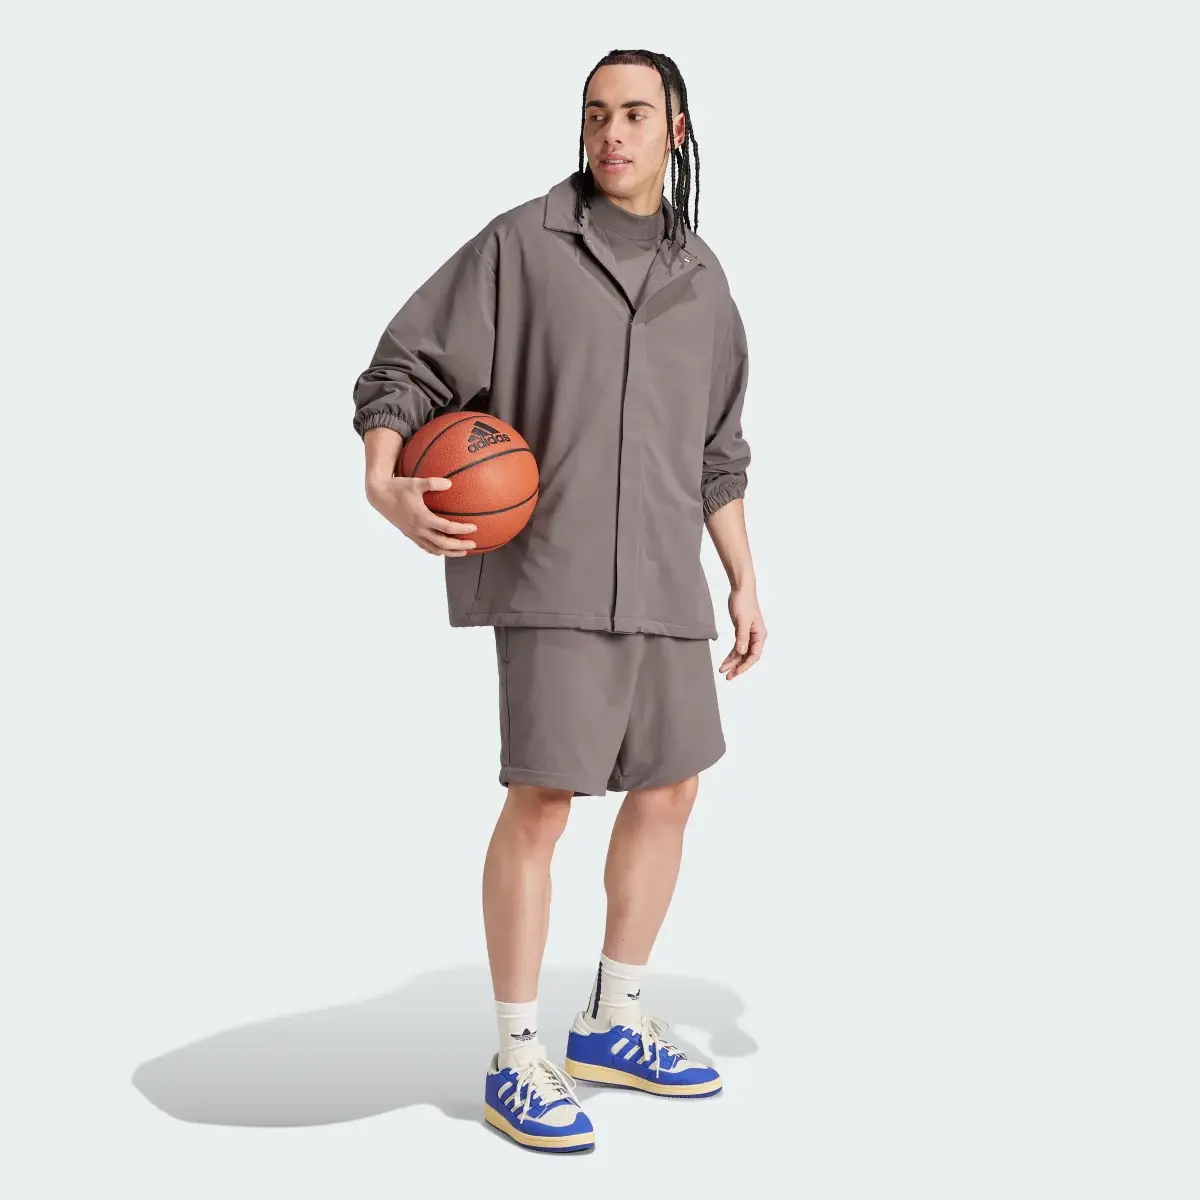 Adidas Basketball Coach Jacket. 3